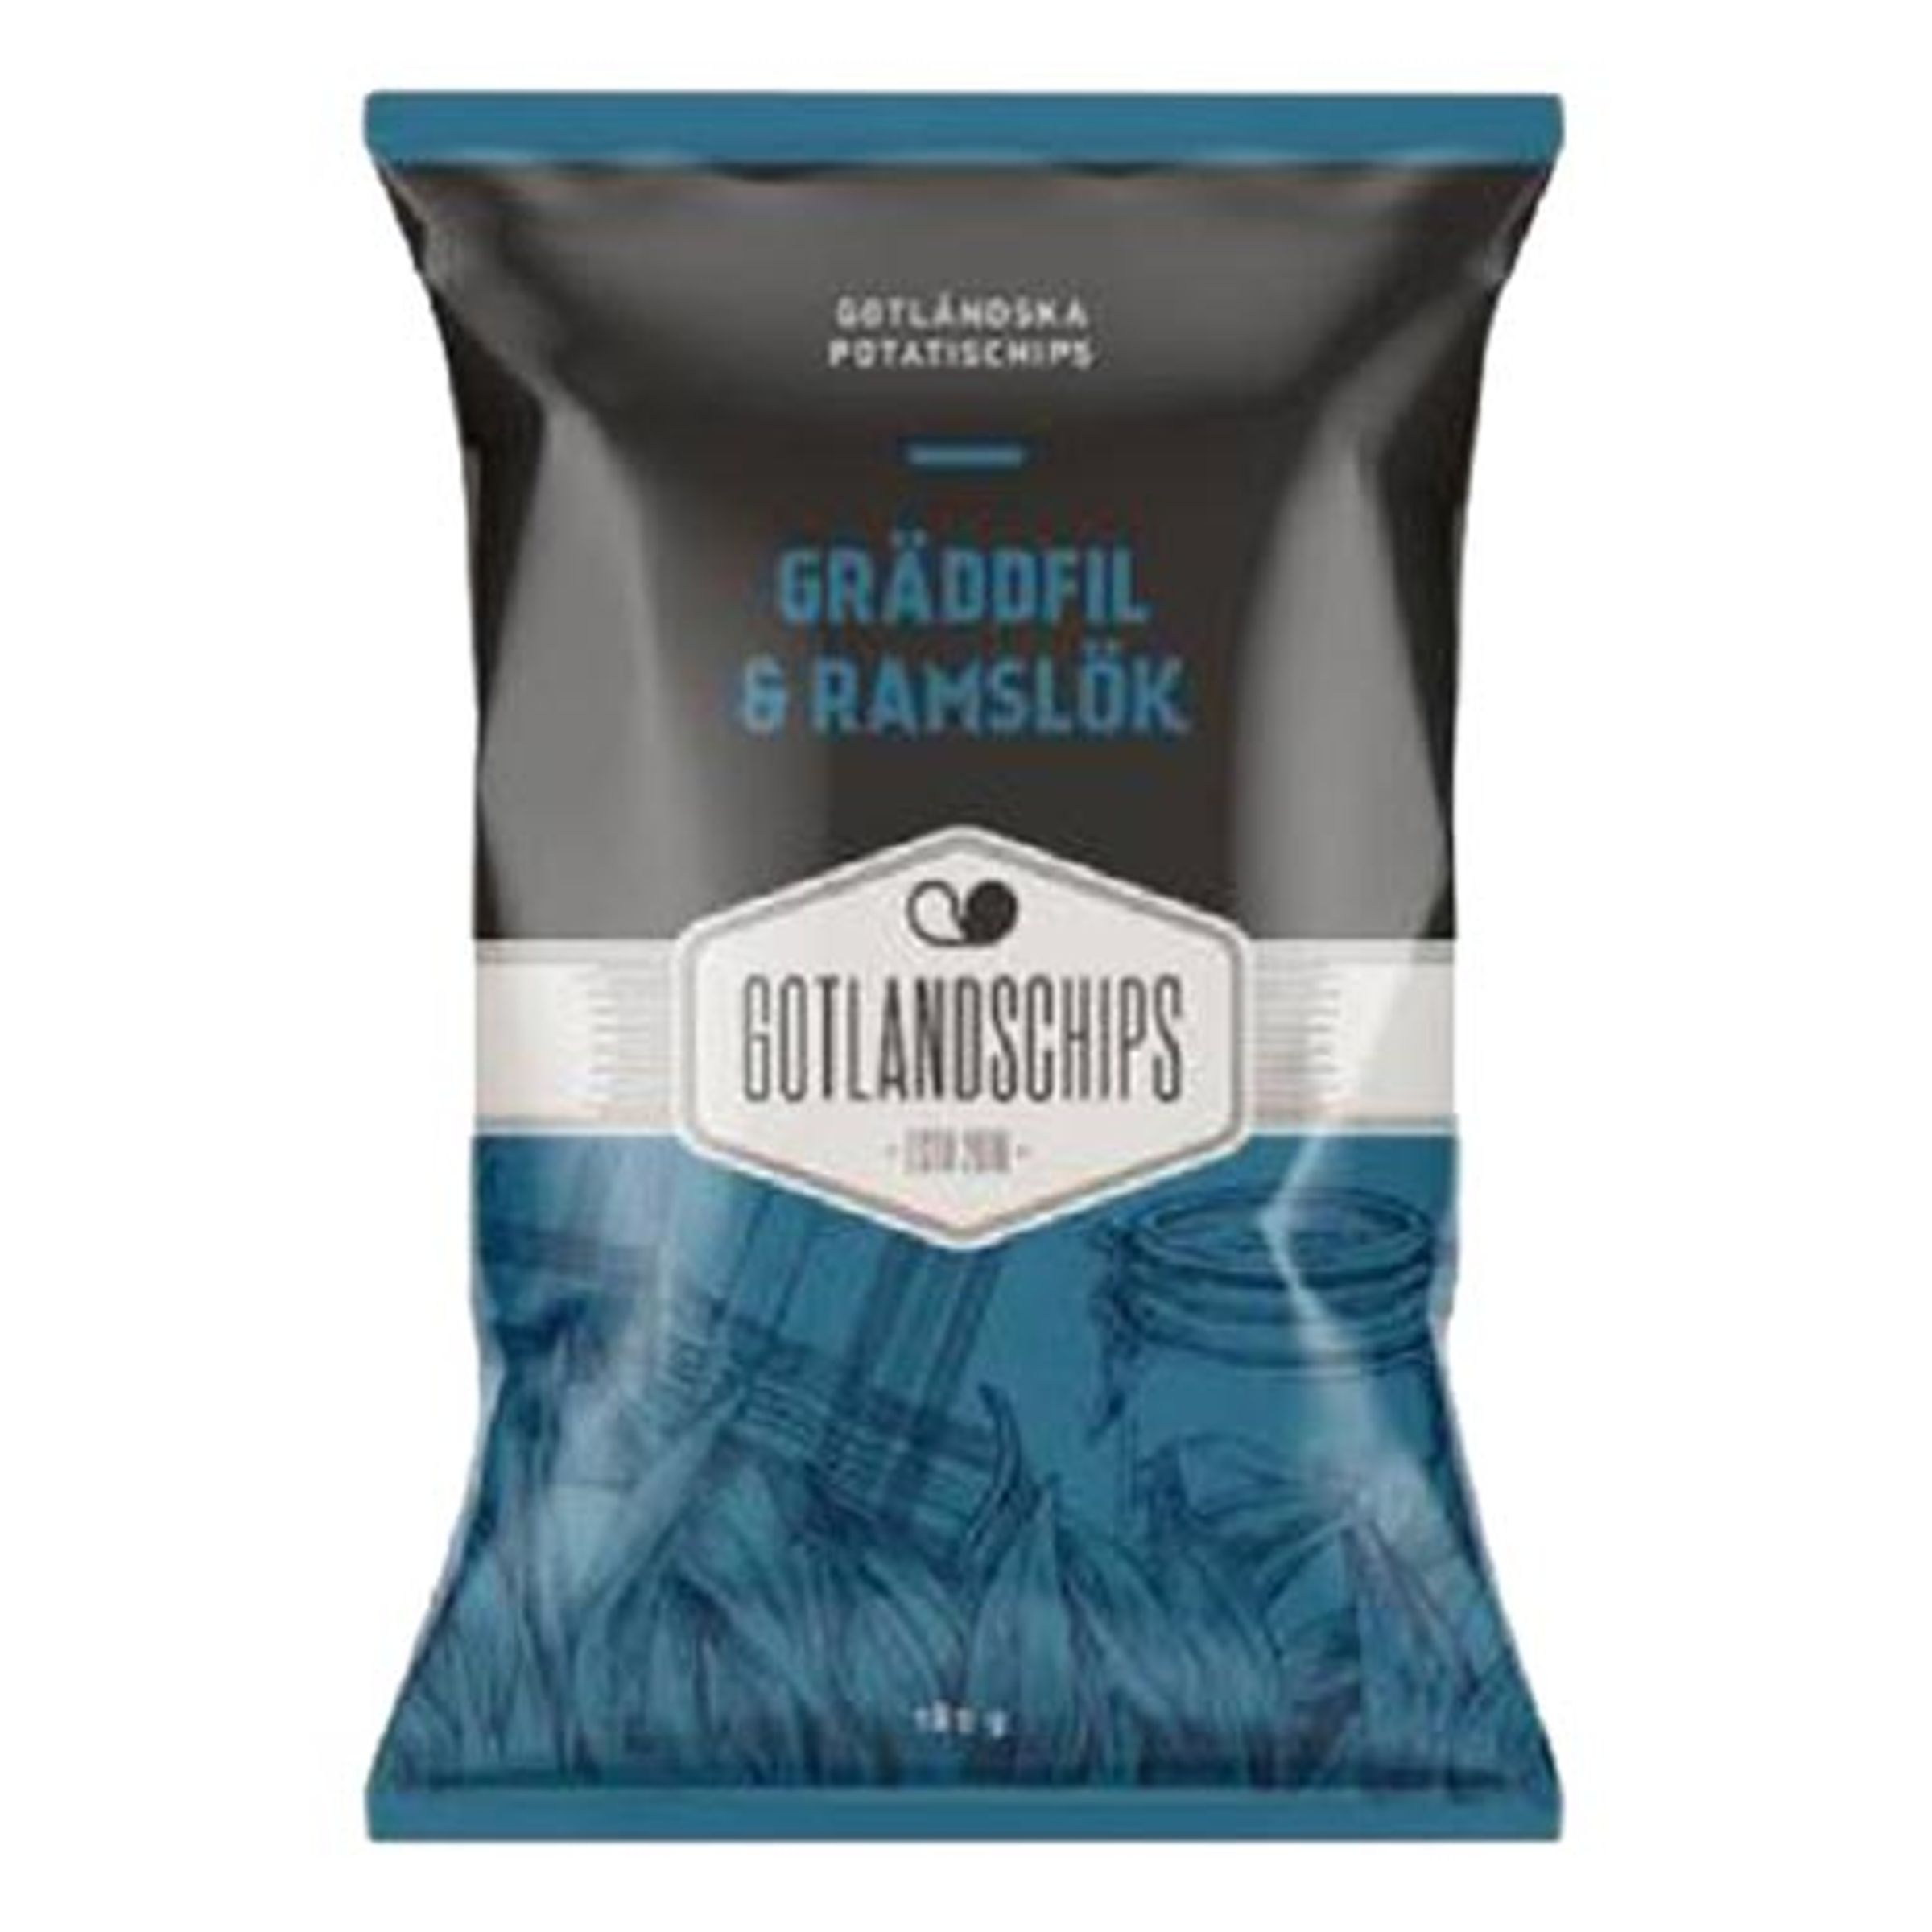 Gotlandschips Gräddfil & Ramslök - 180 gram